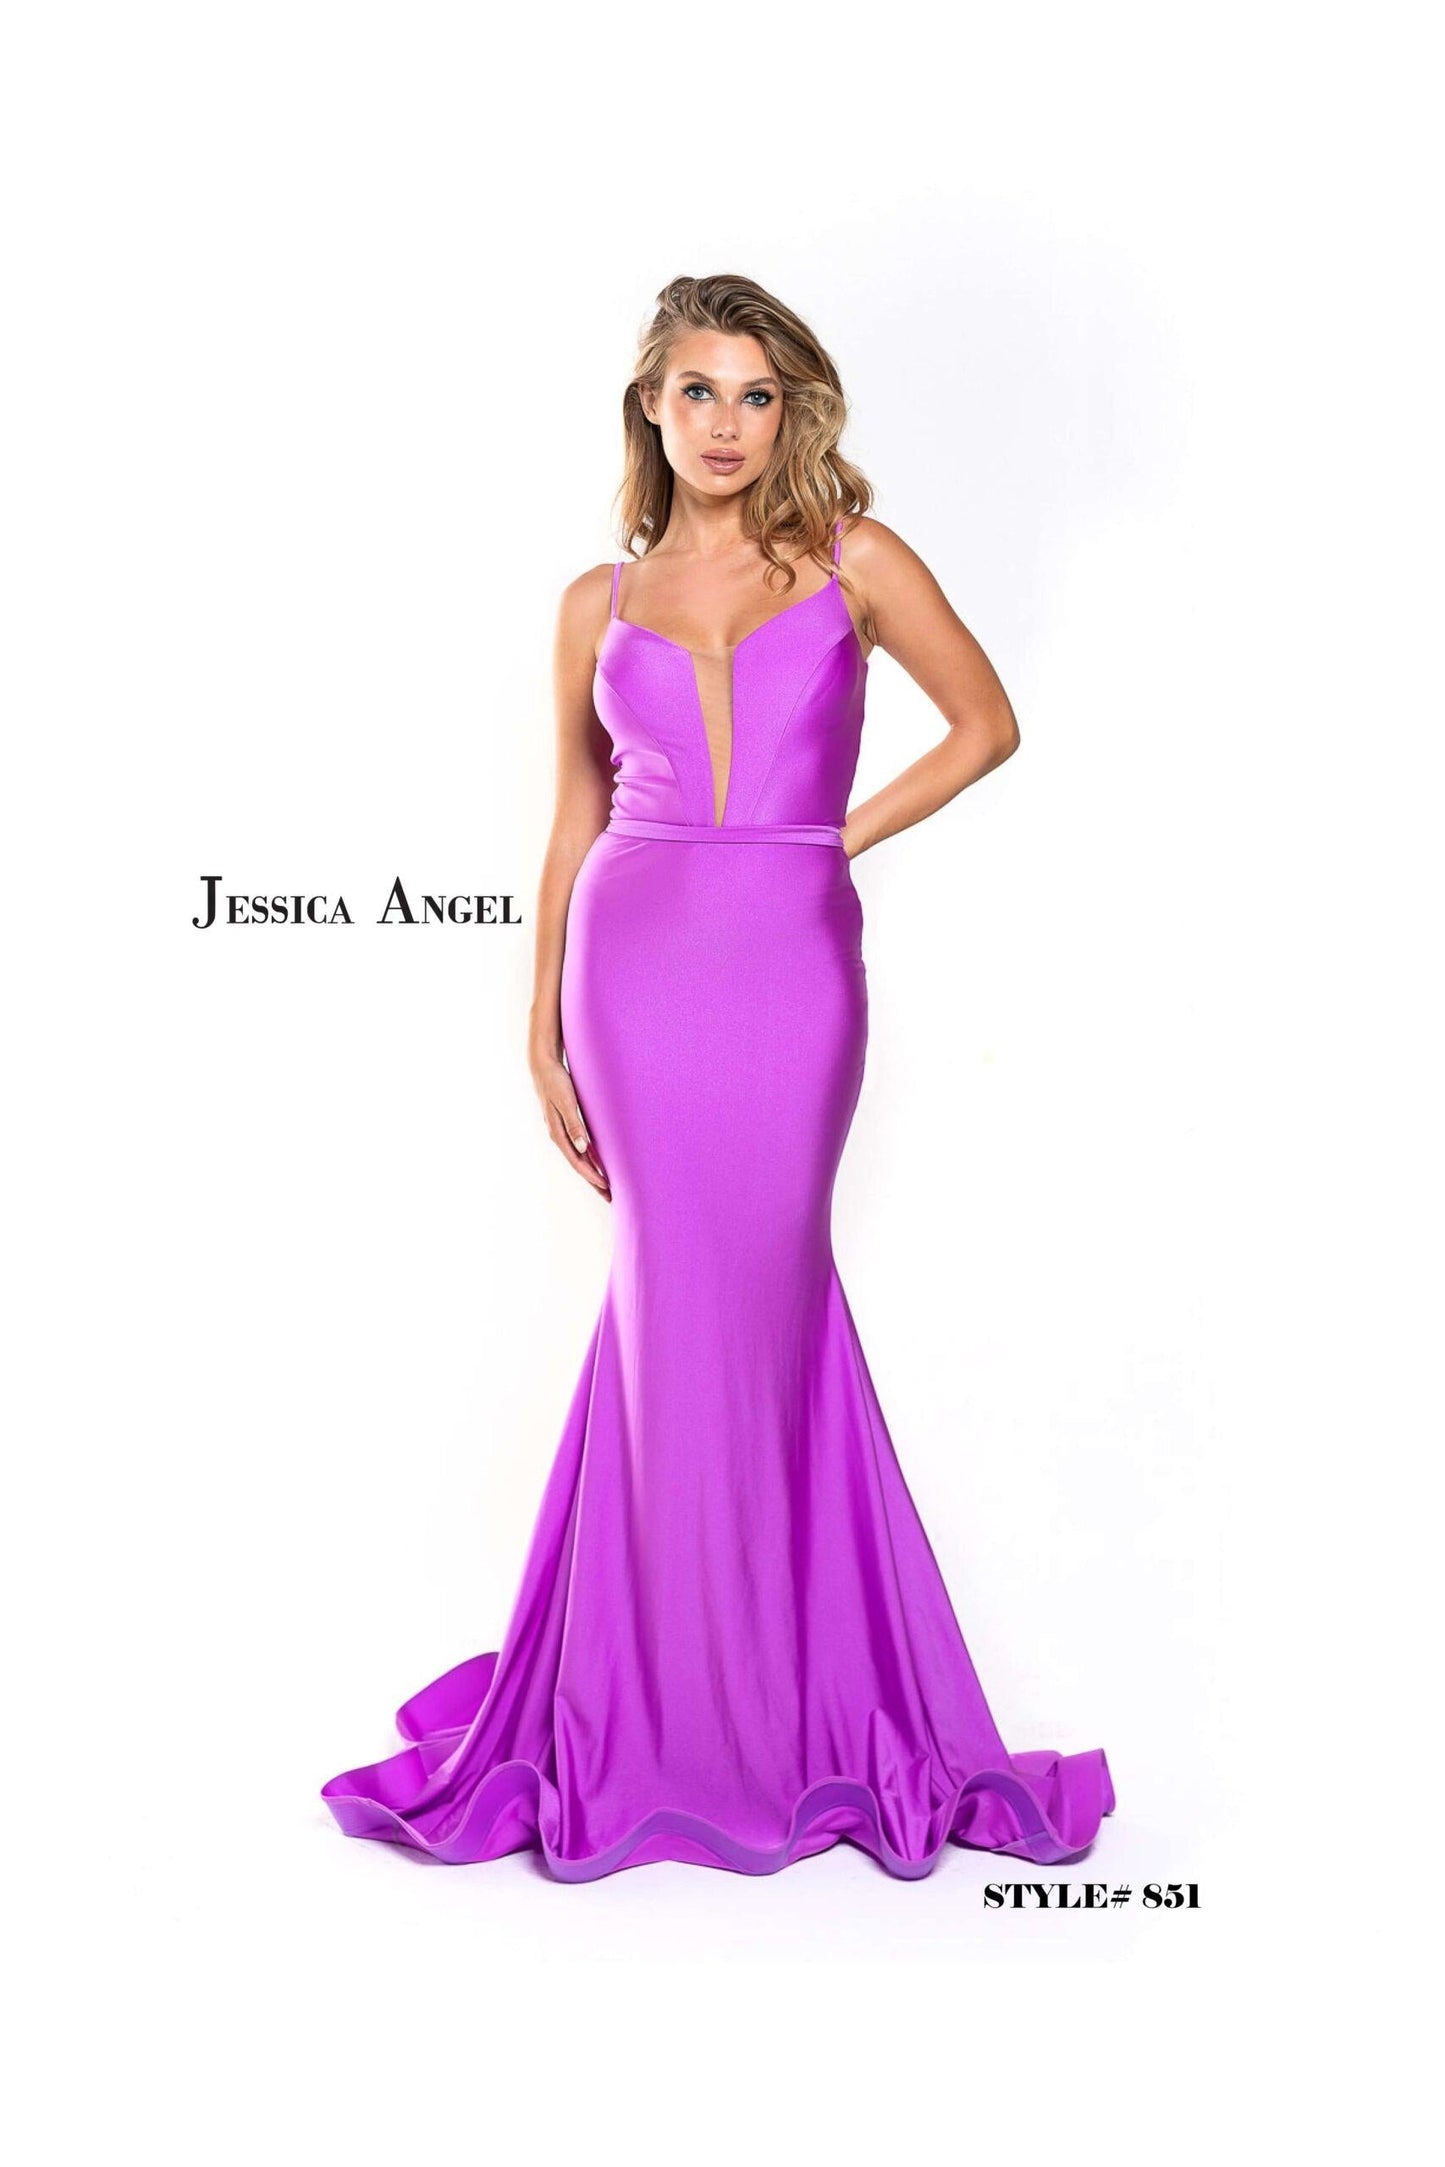 Jessica Angel Sleeveless Long Mermaid Dress 851 - The Dress Outlet